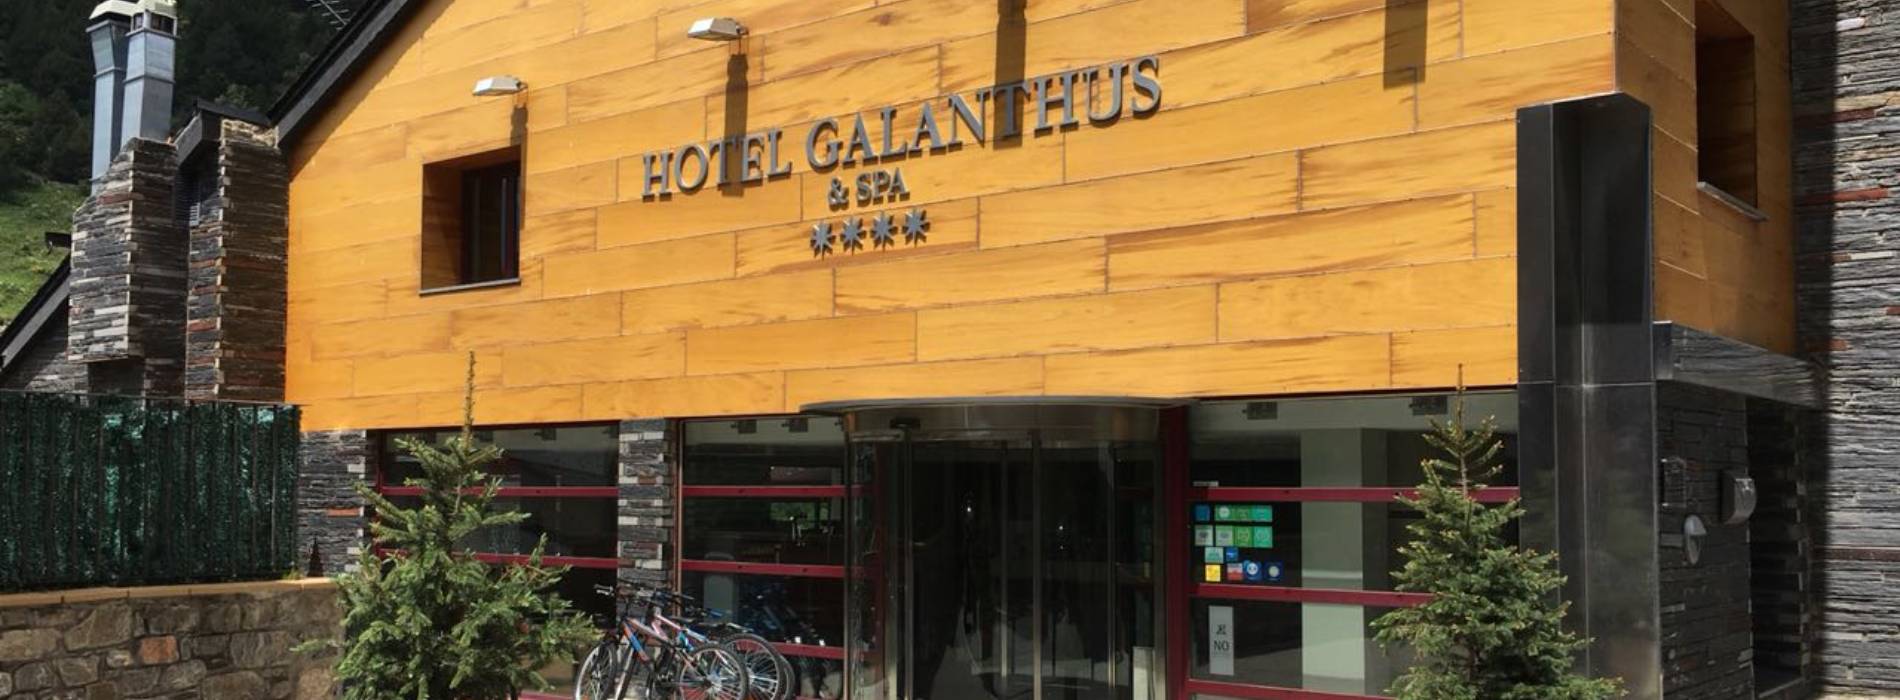 Hotel Galanthus & Spa